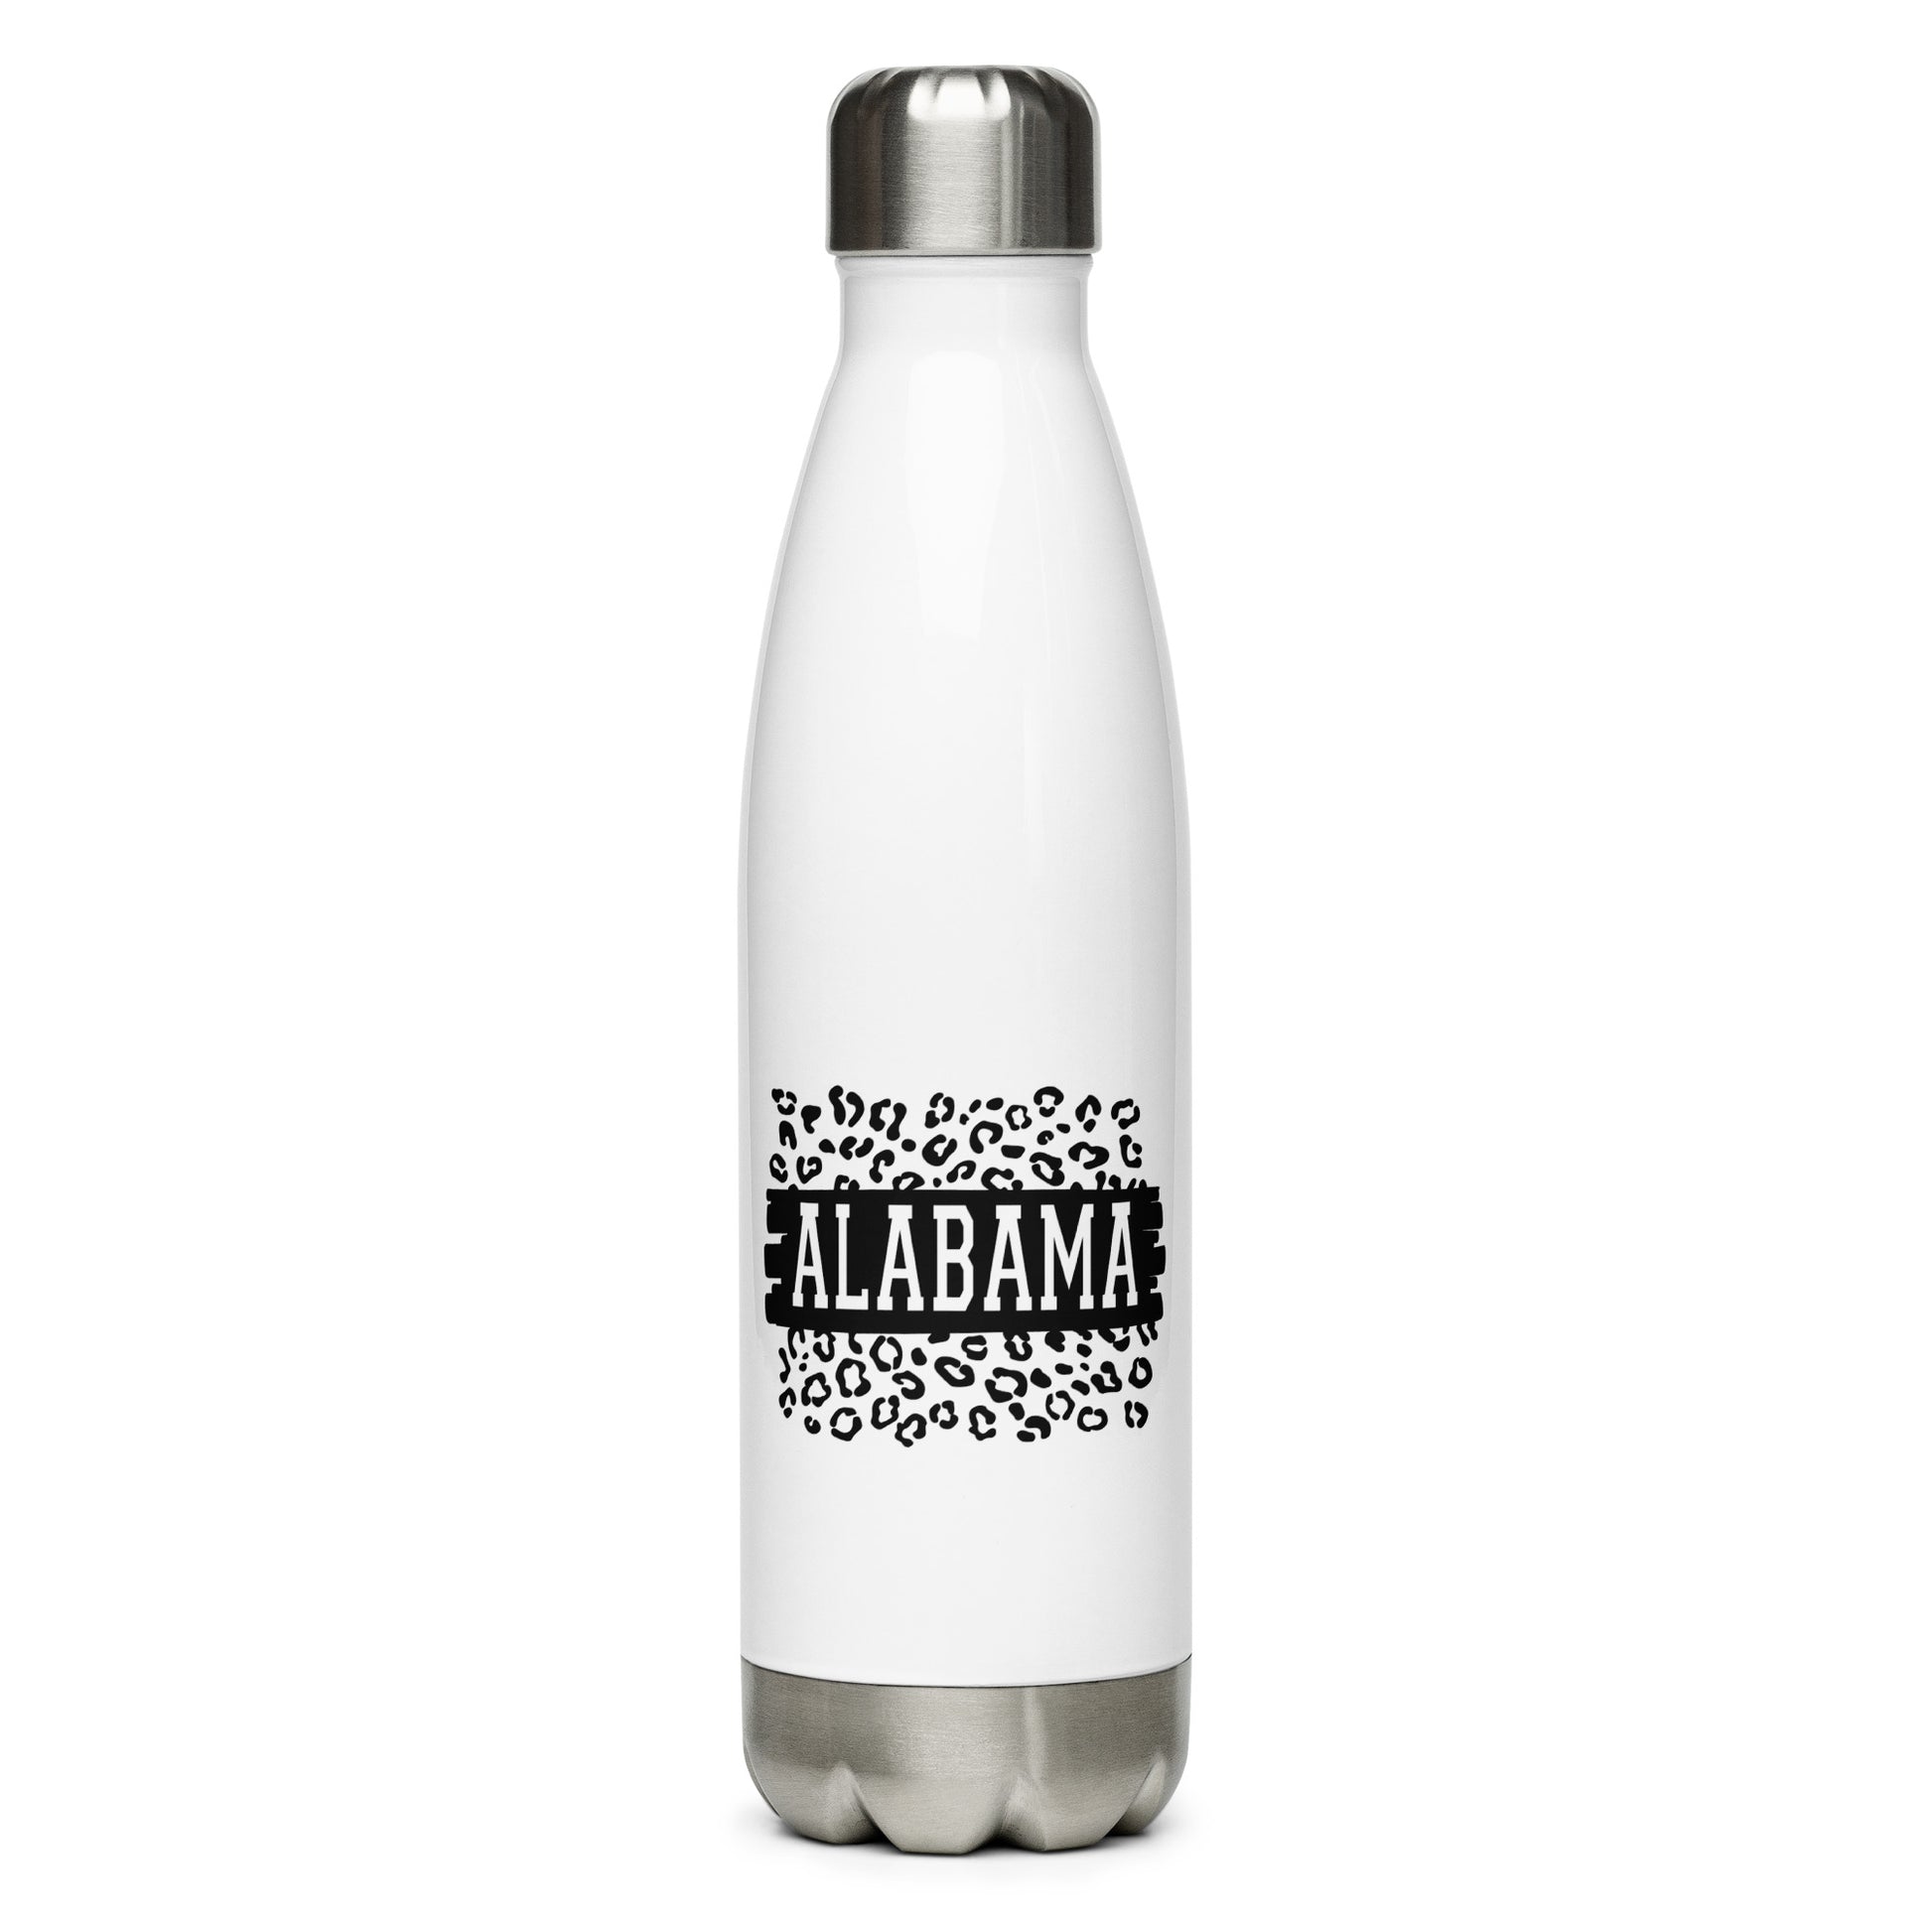 Alabama Black on Leopard Print Stainless Steel Water Bottle